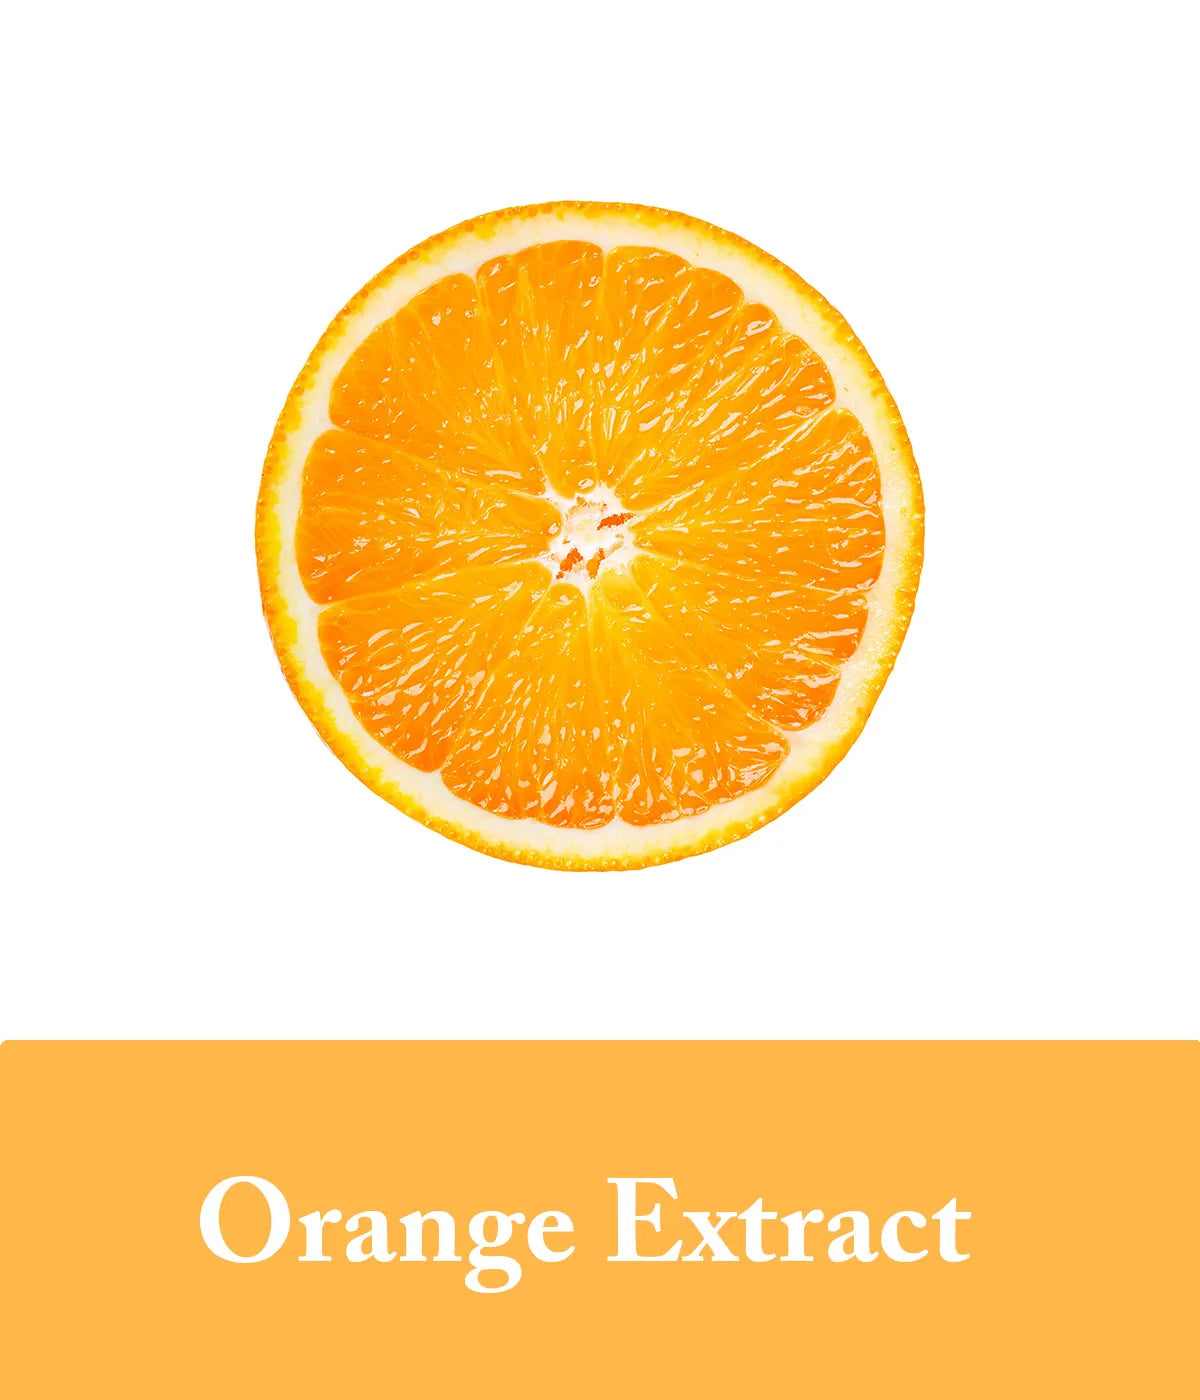 Freshly sliced orange providing natural citrus essence, a revitalizing ingredient in our honey shampoo for healthy, radiant hair.